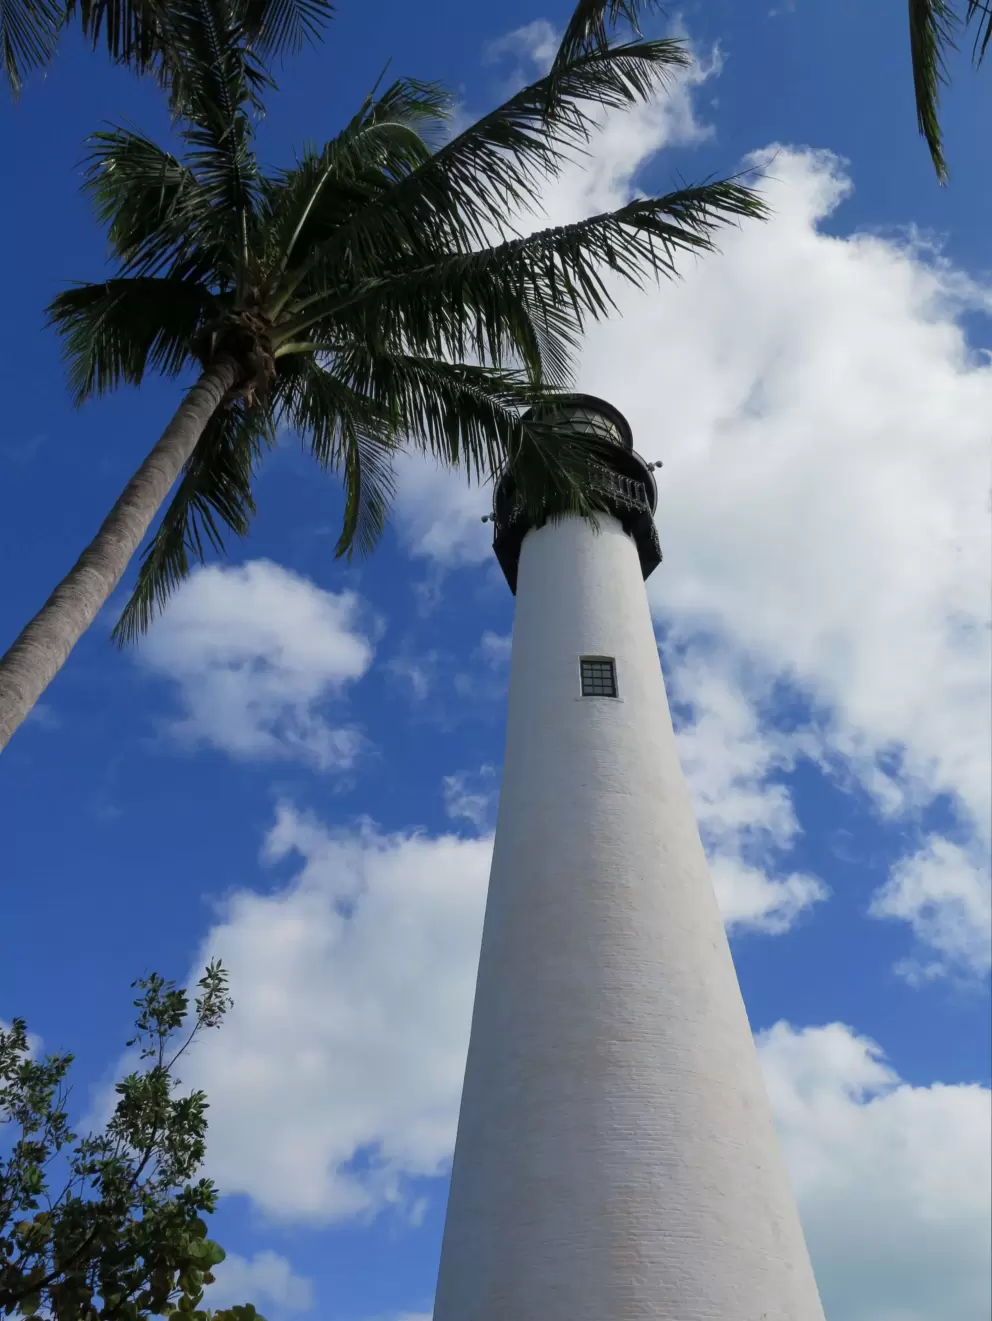 Cape Florida Lighthouse, Key Biscayne